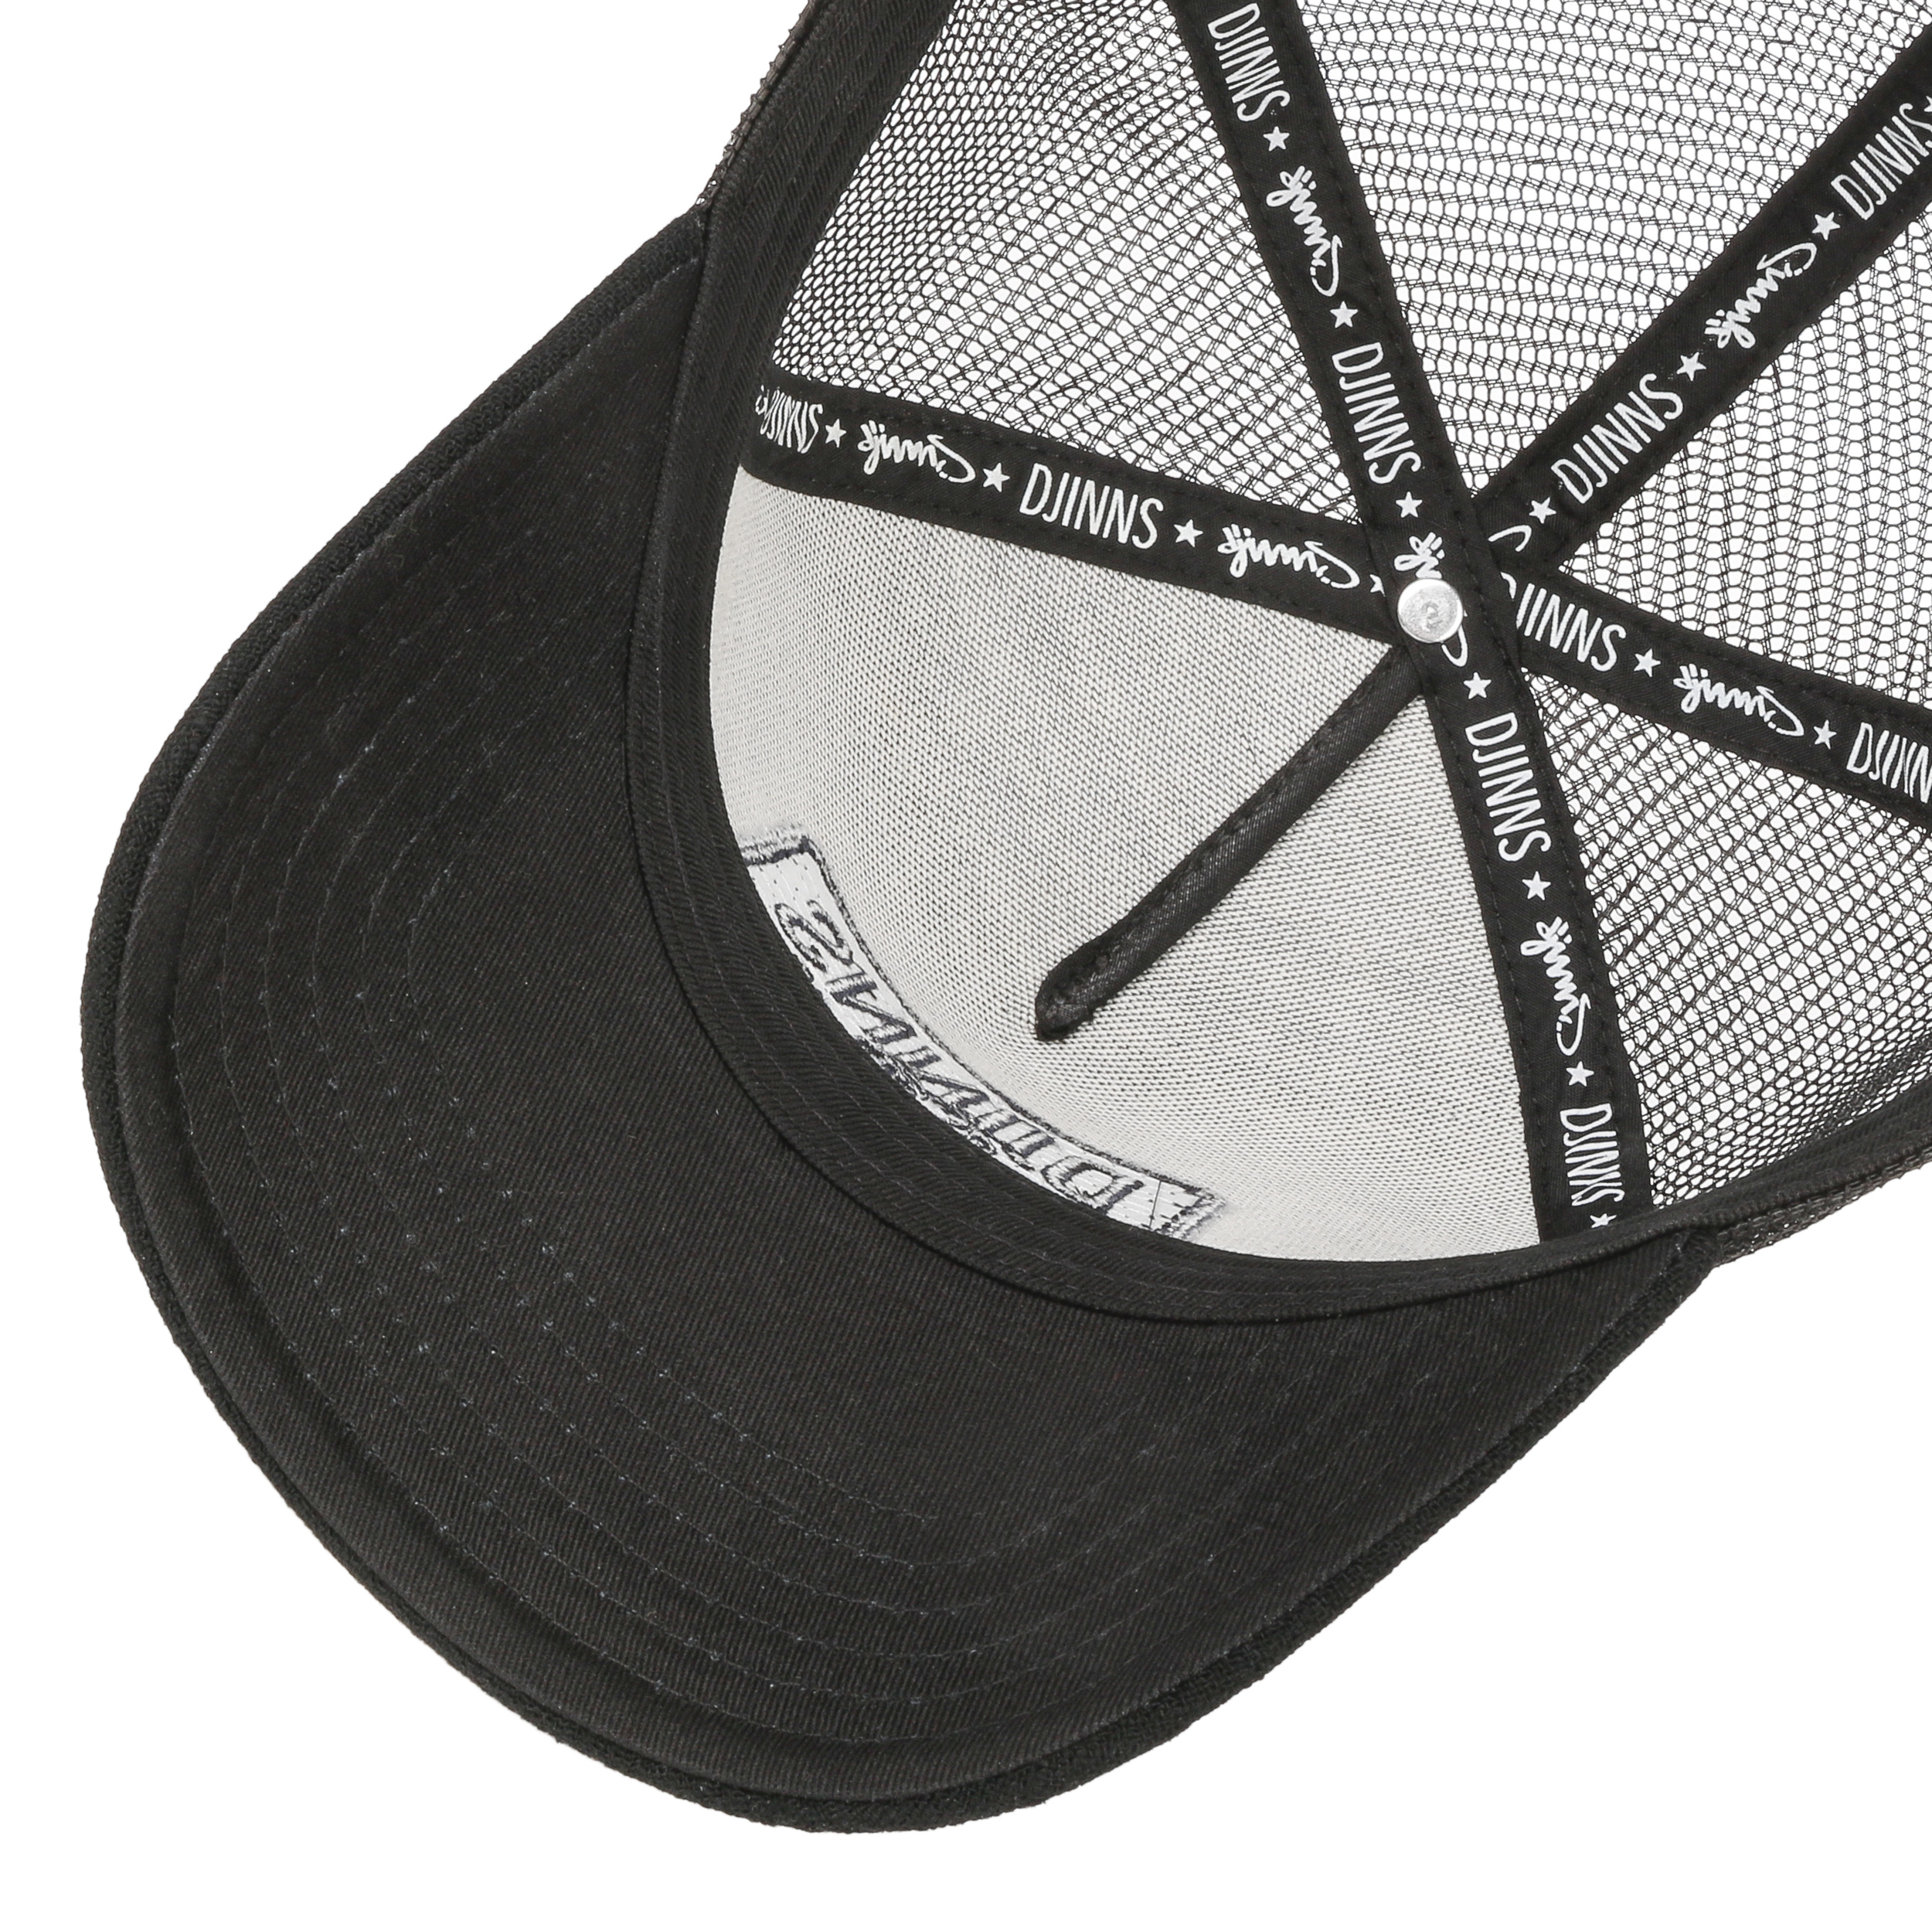 Djinns Trucker Caps Felt Rubber black Outdoor Sport Kap Kopfbedeckung 